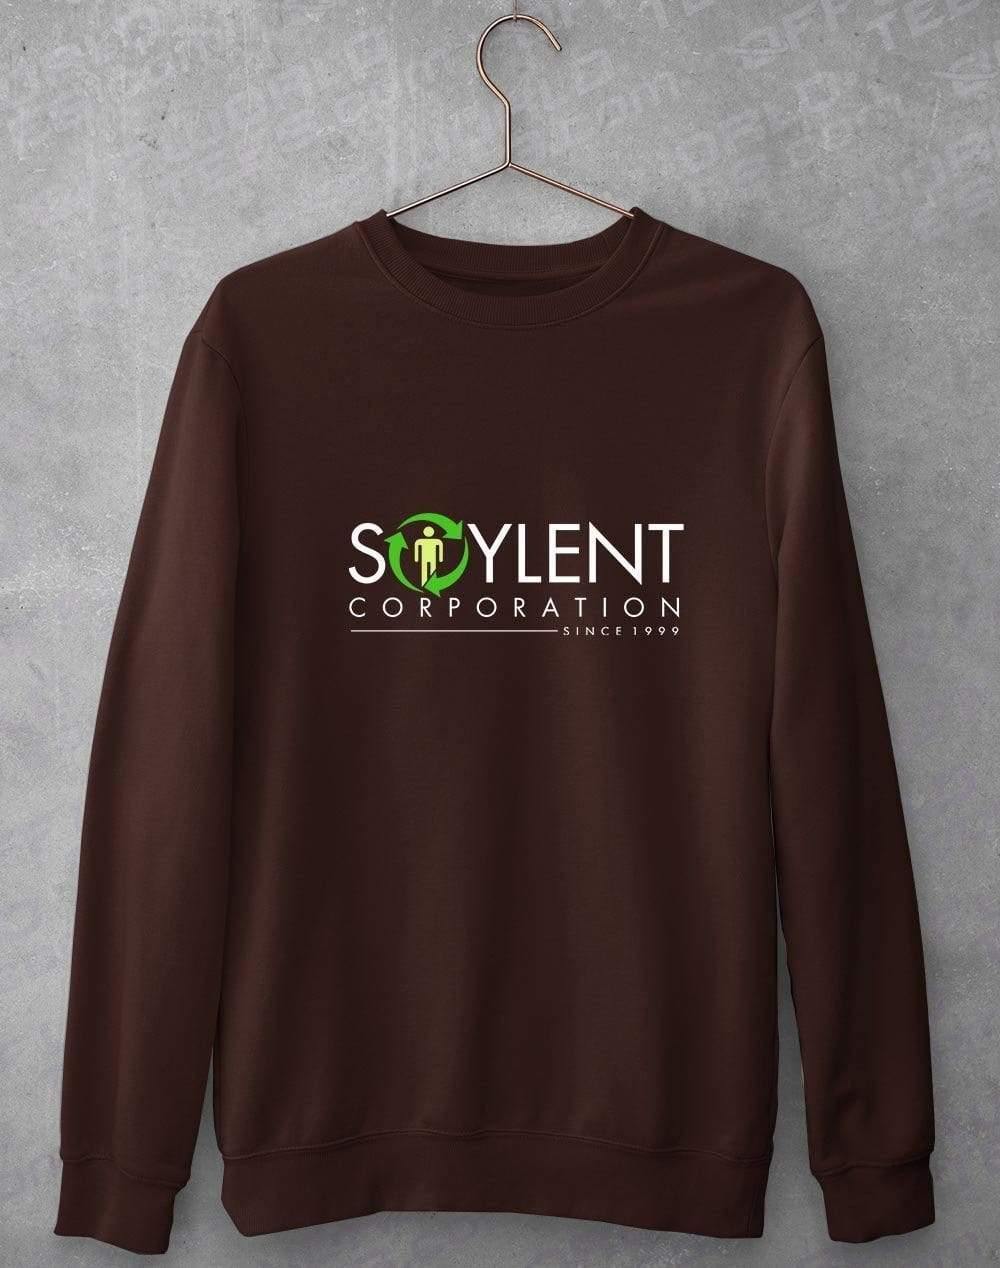 Soylent Corporation Sweatshirt S / Chocolate  - Off World Tees